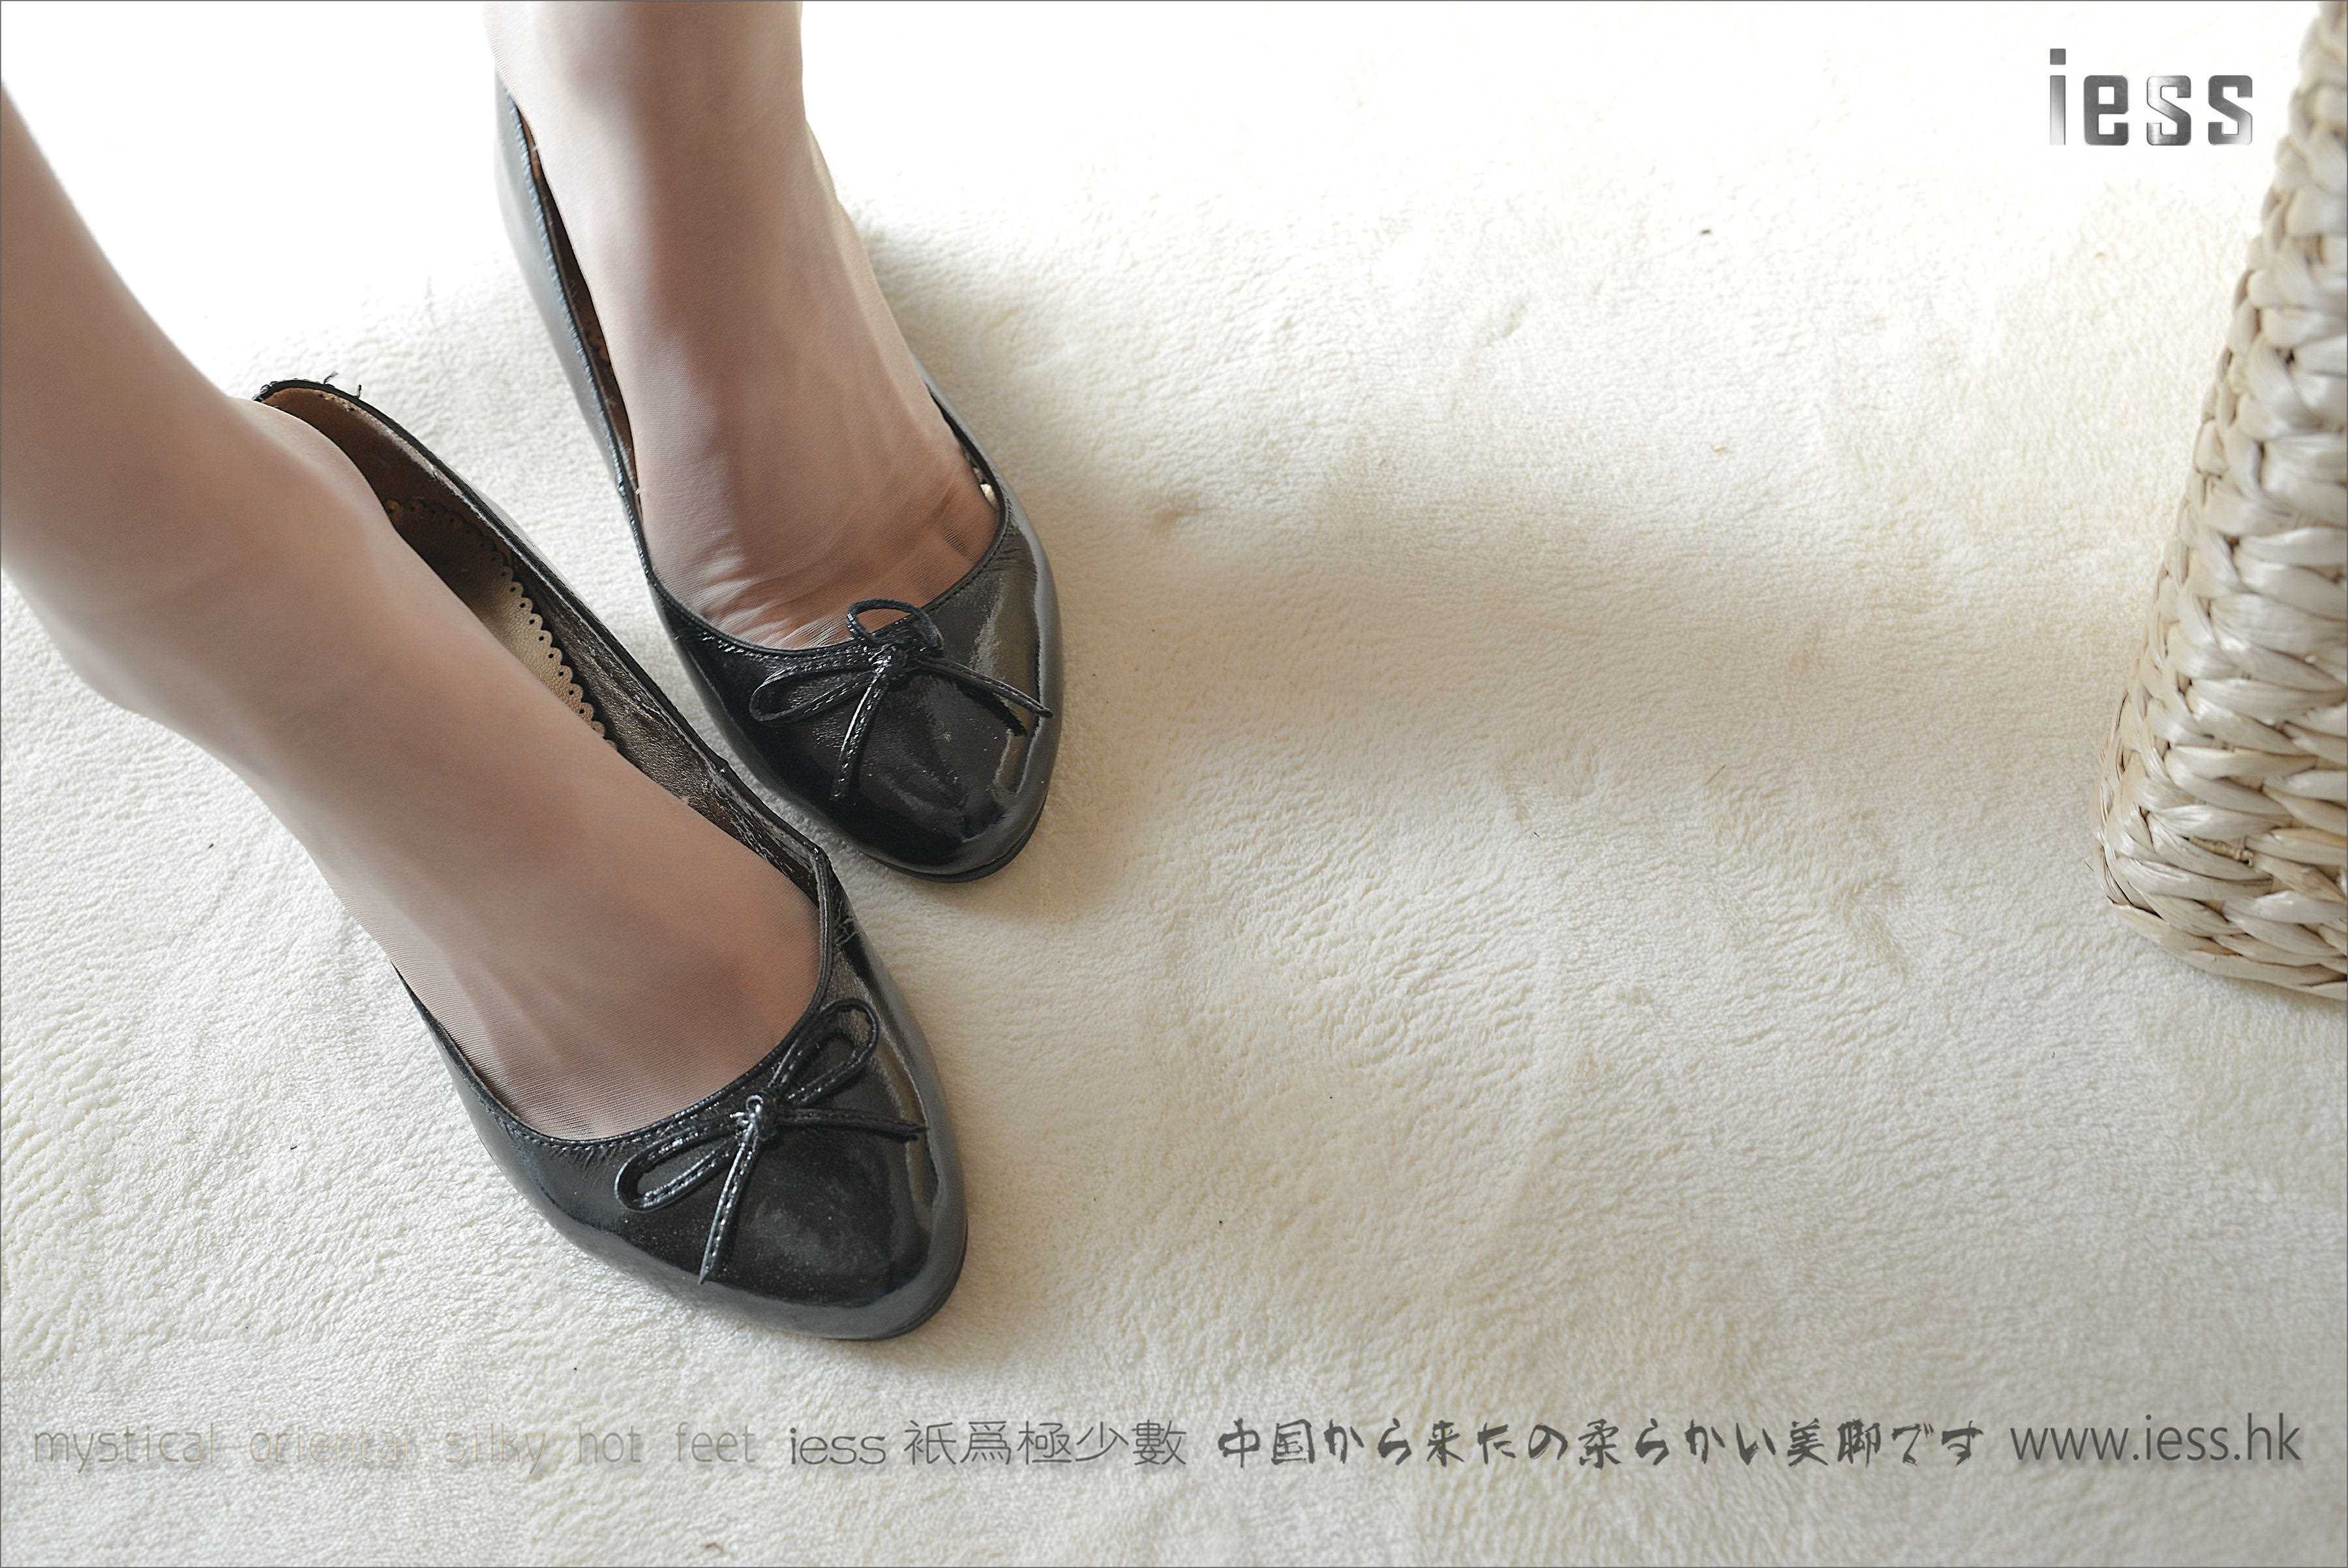 China Beauty Legs and feet 159